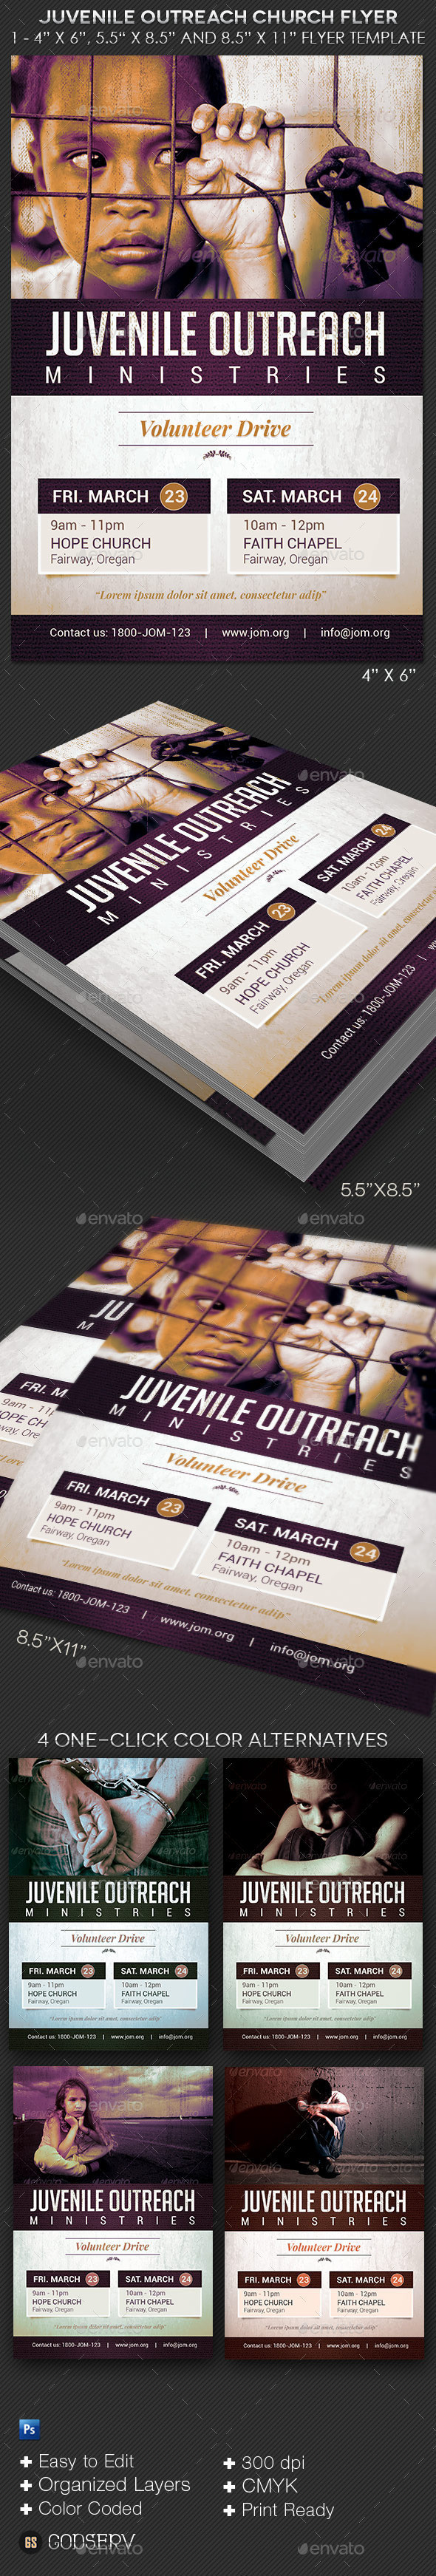 Juvenile outreach church flyer template  preview